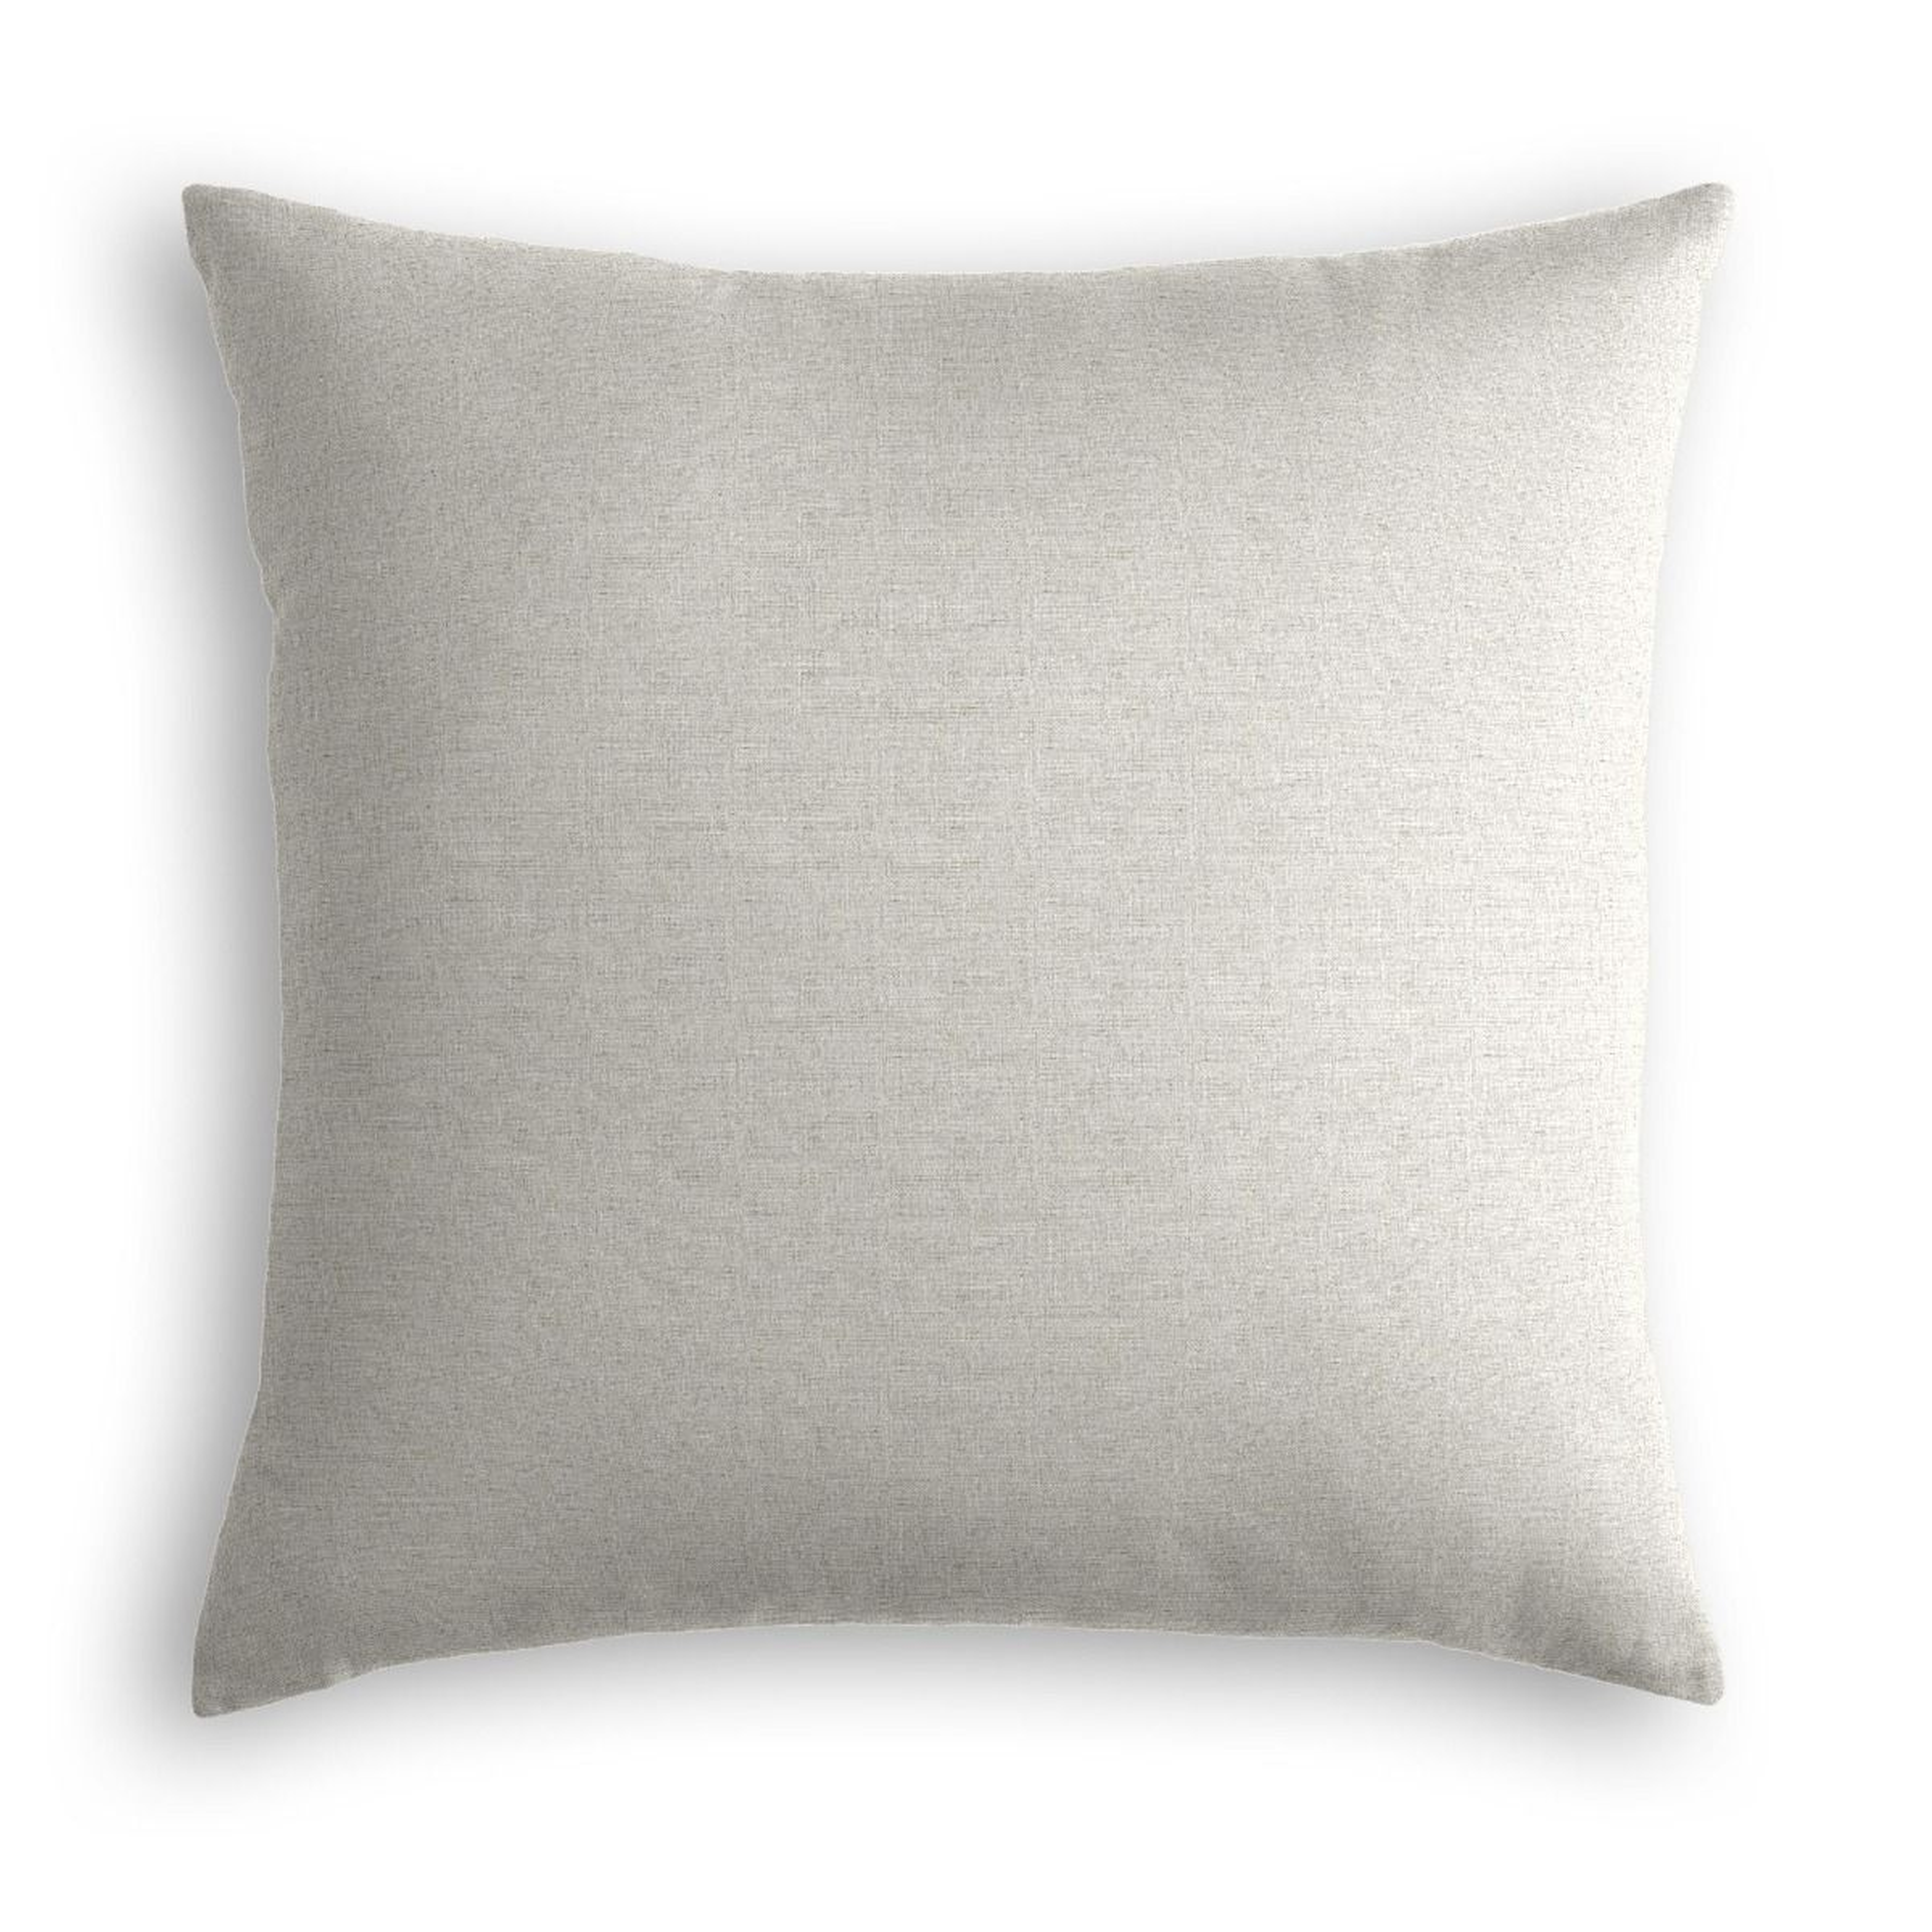 Classic Linen Pillow, Sandy Tan, 22" x 22" - Havenly Essentials